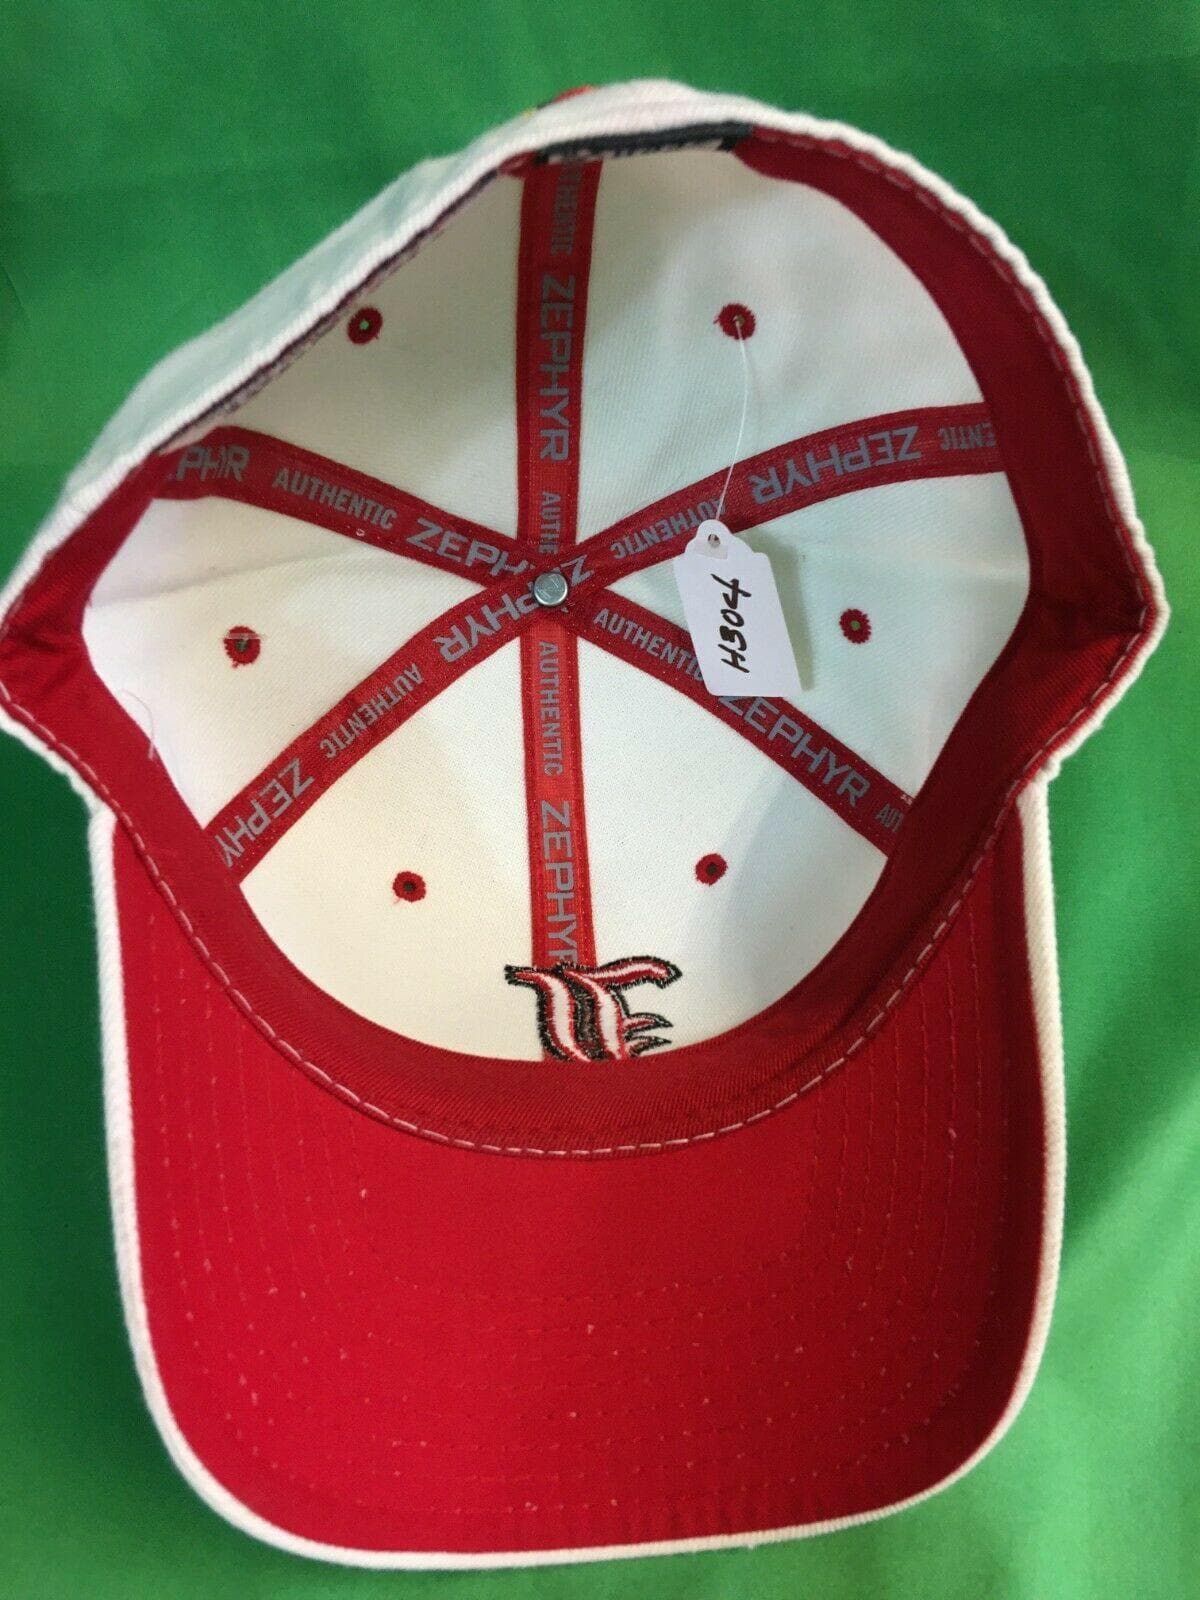 NCAA Louisville Cardinals White Hat/Cap Size 7-1/8 NWT